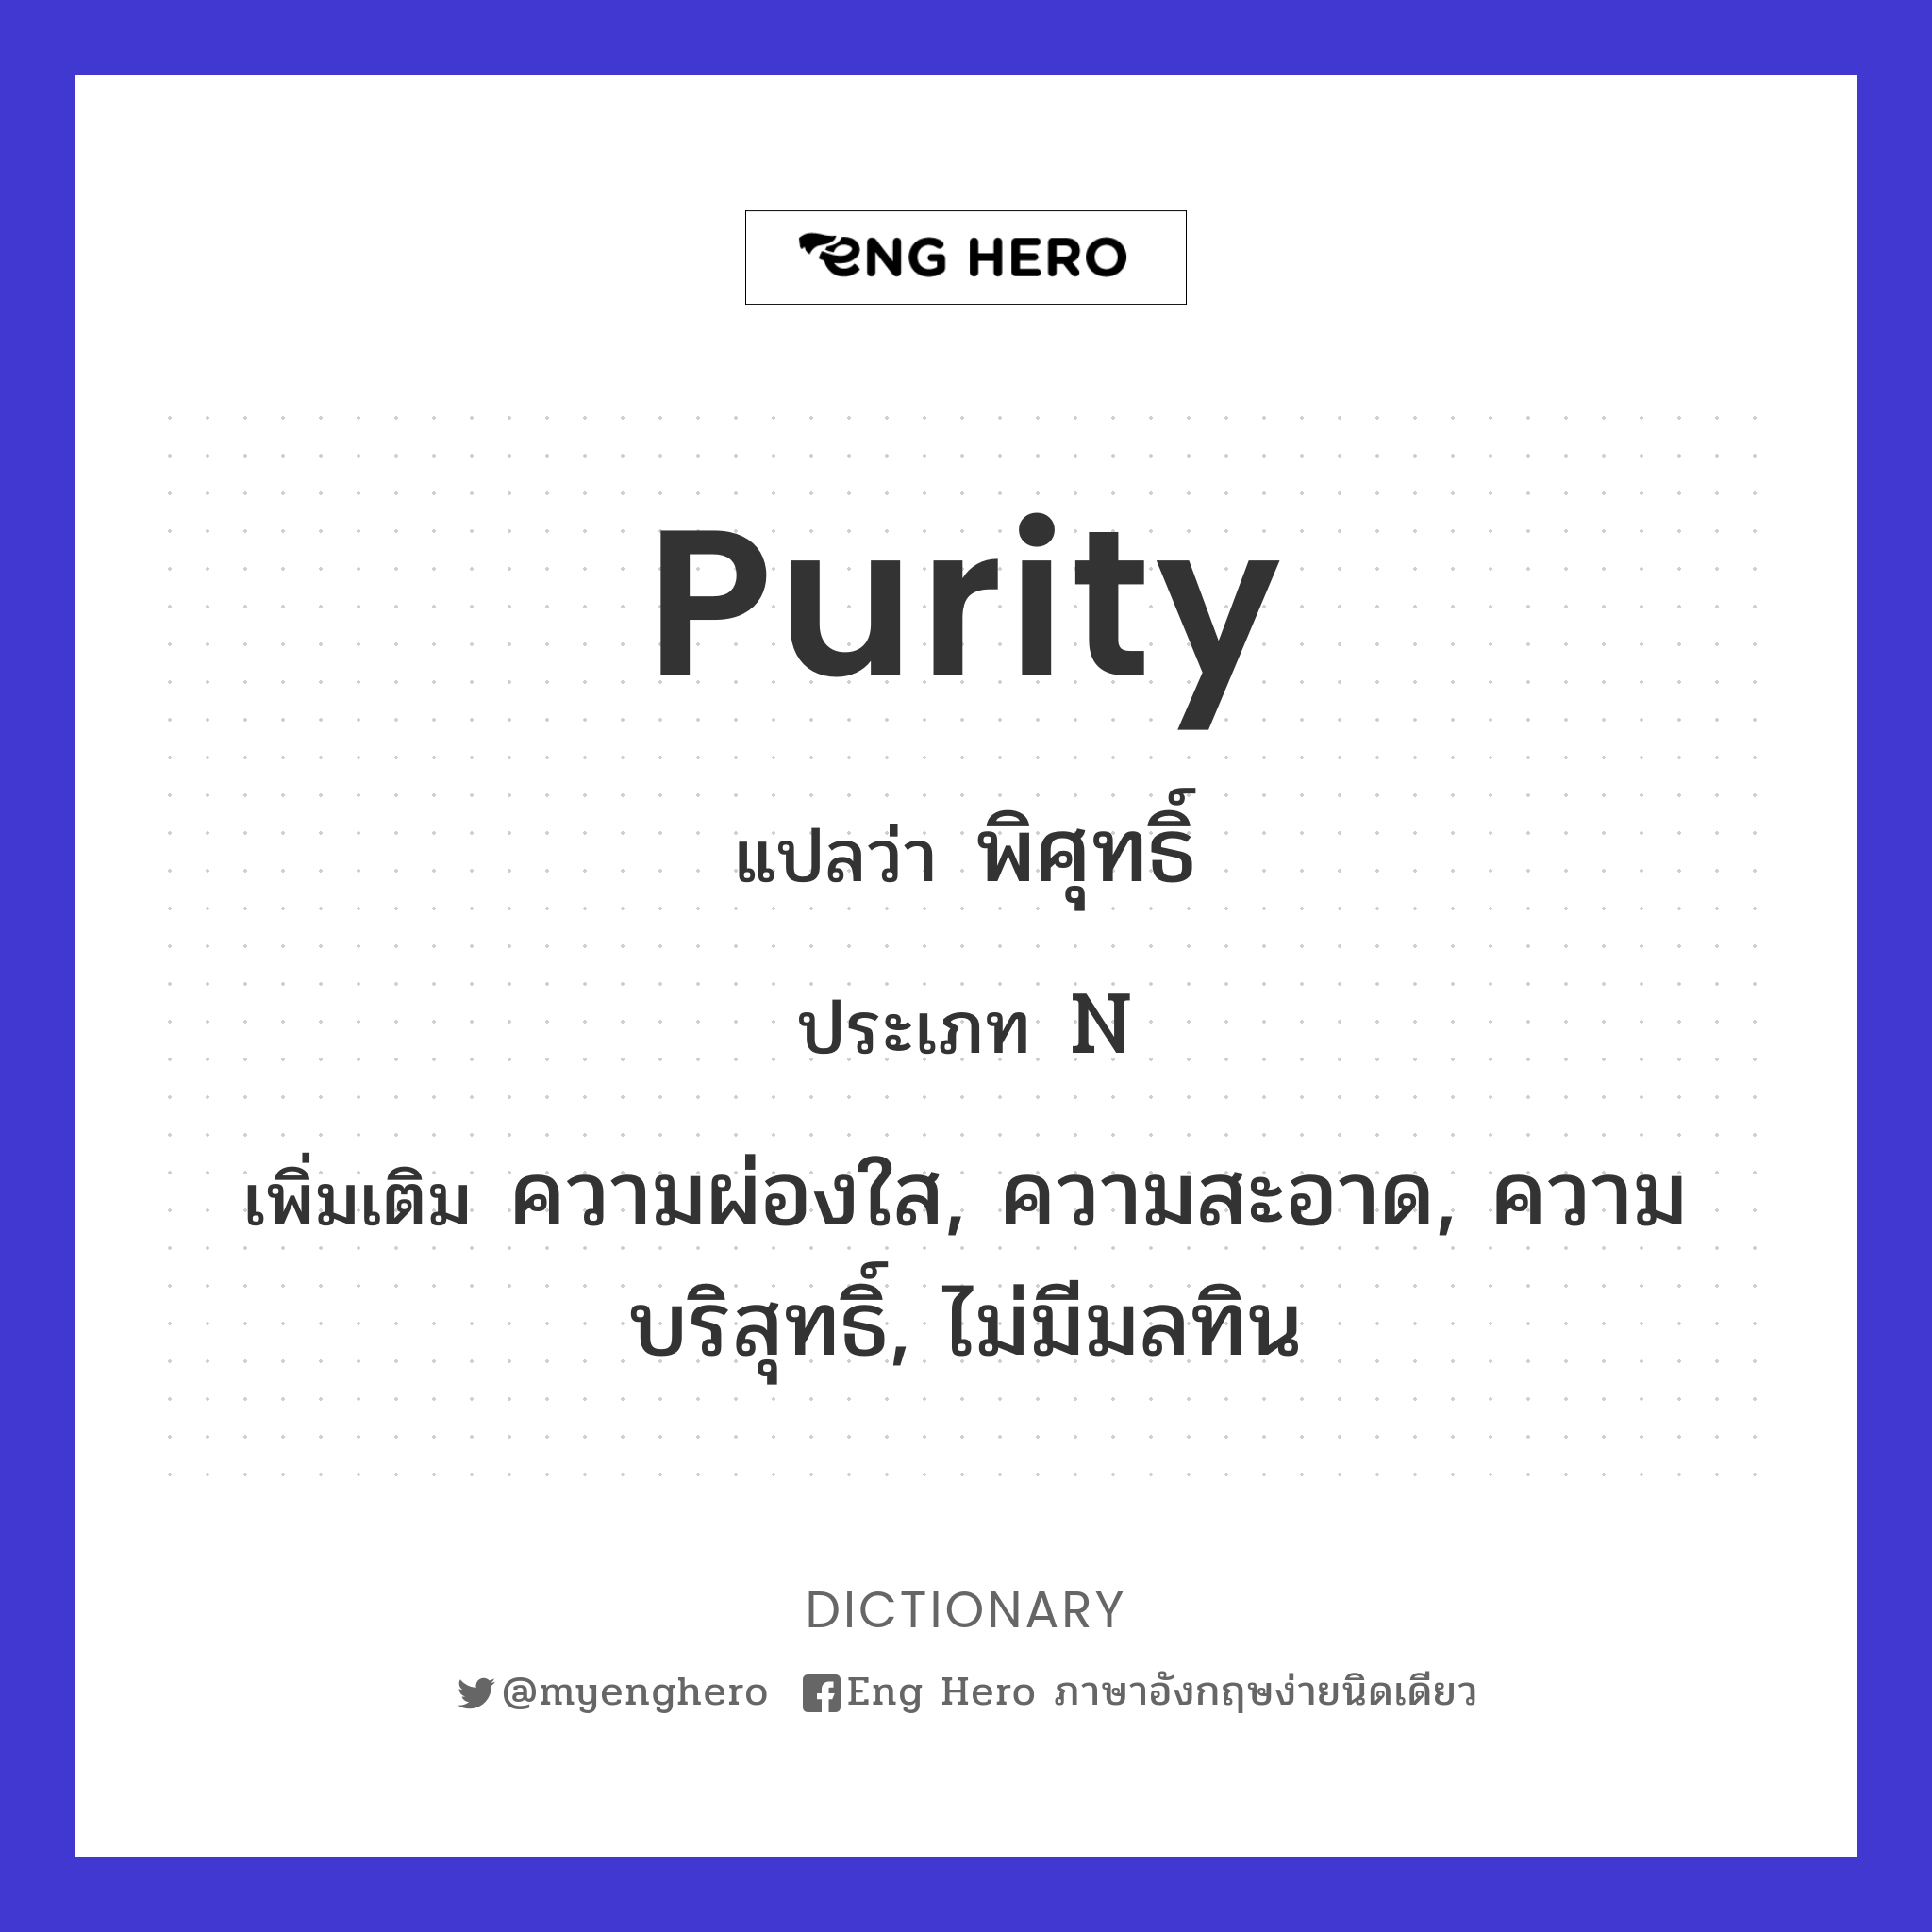 purity